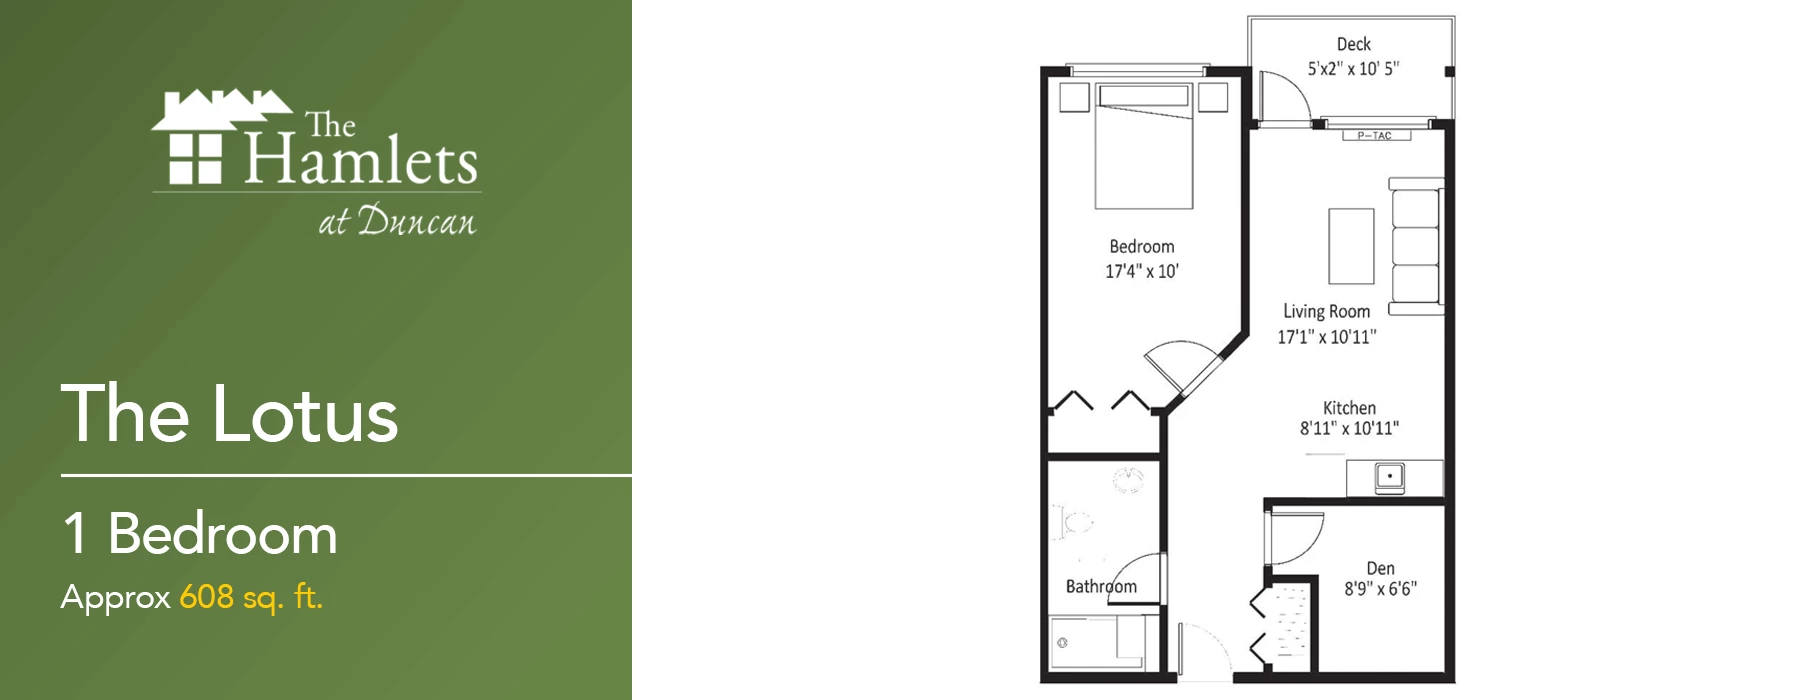 Our Lotus plan - One bedroom plan